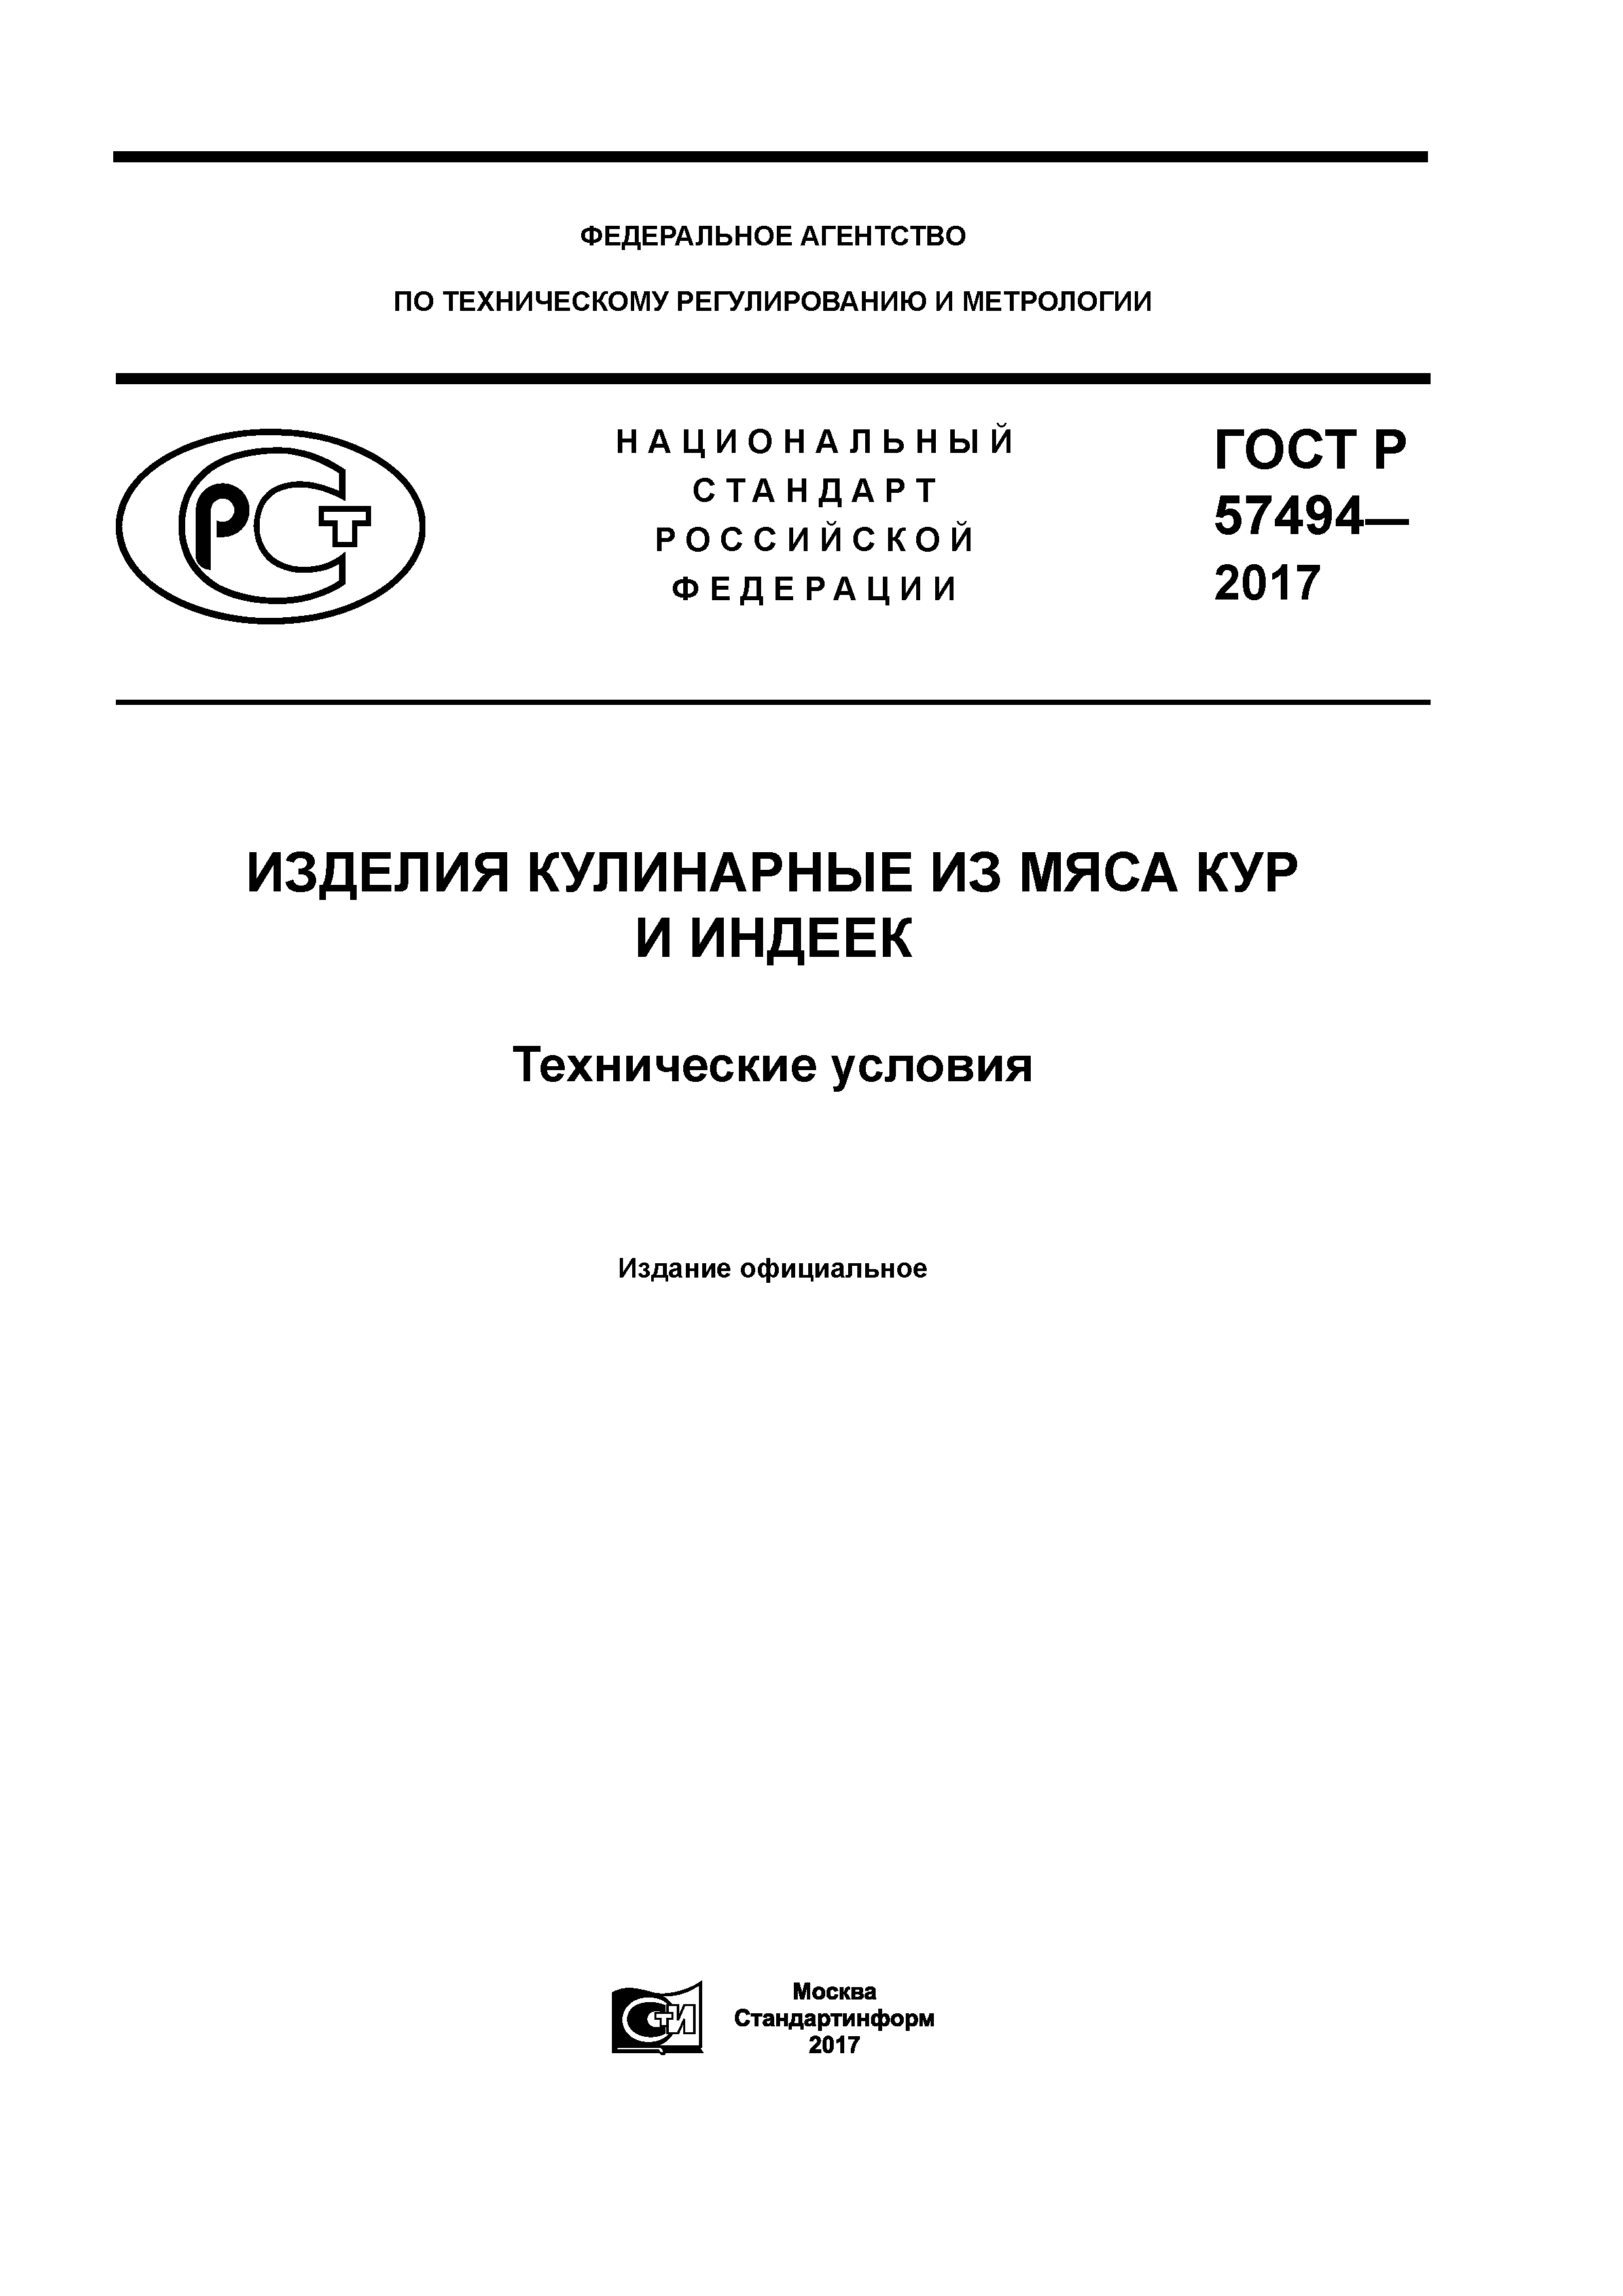 ГОСТ Р 57494-2017